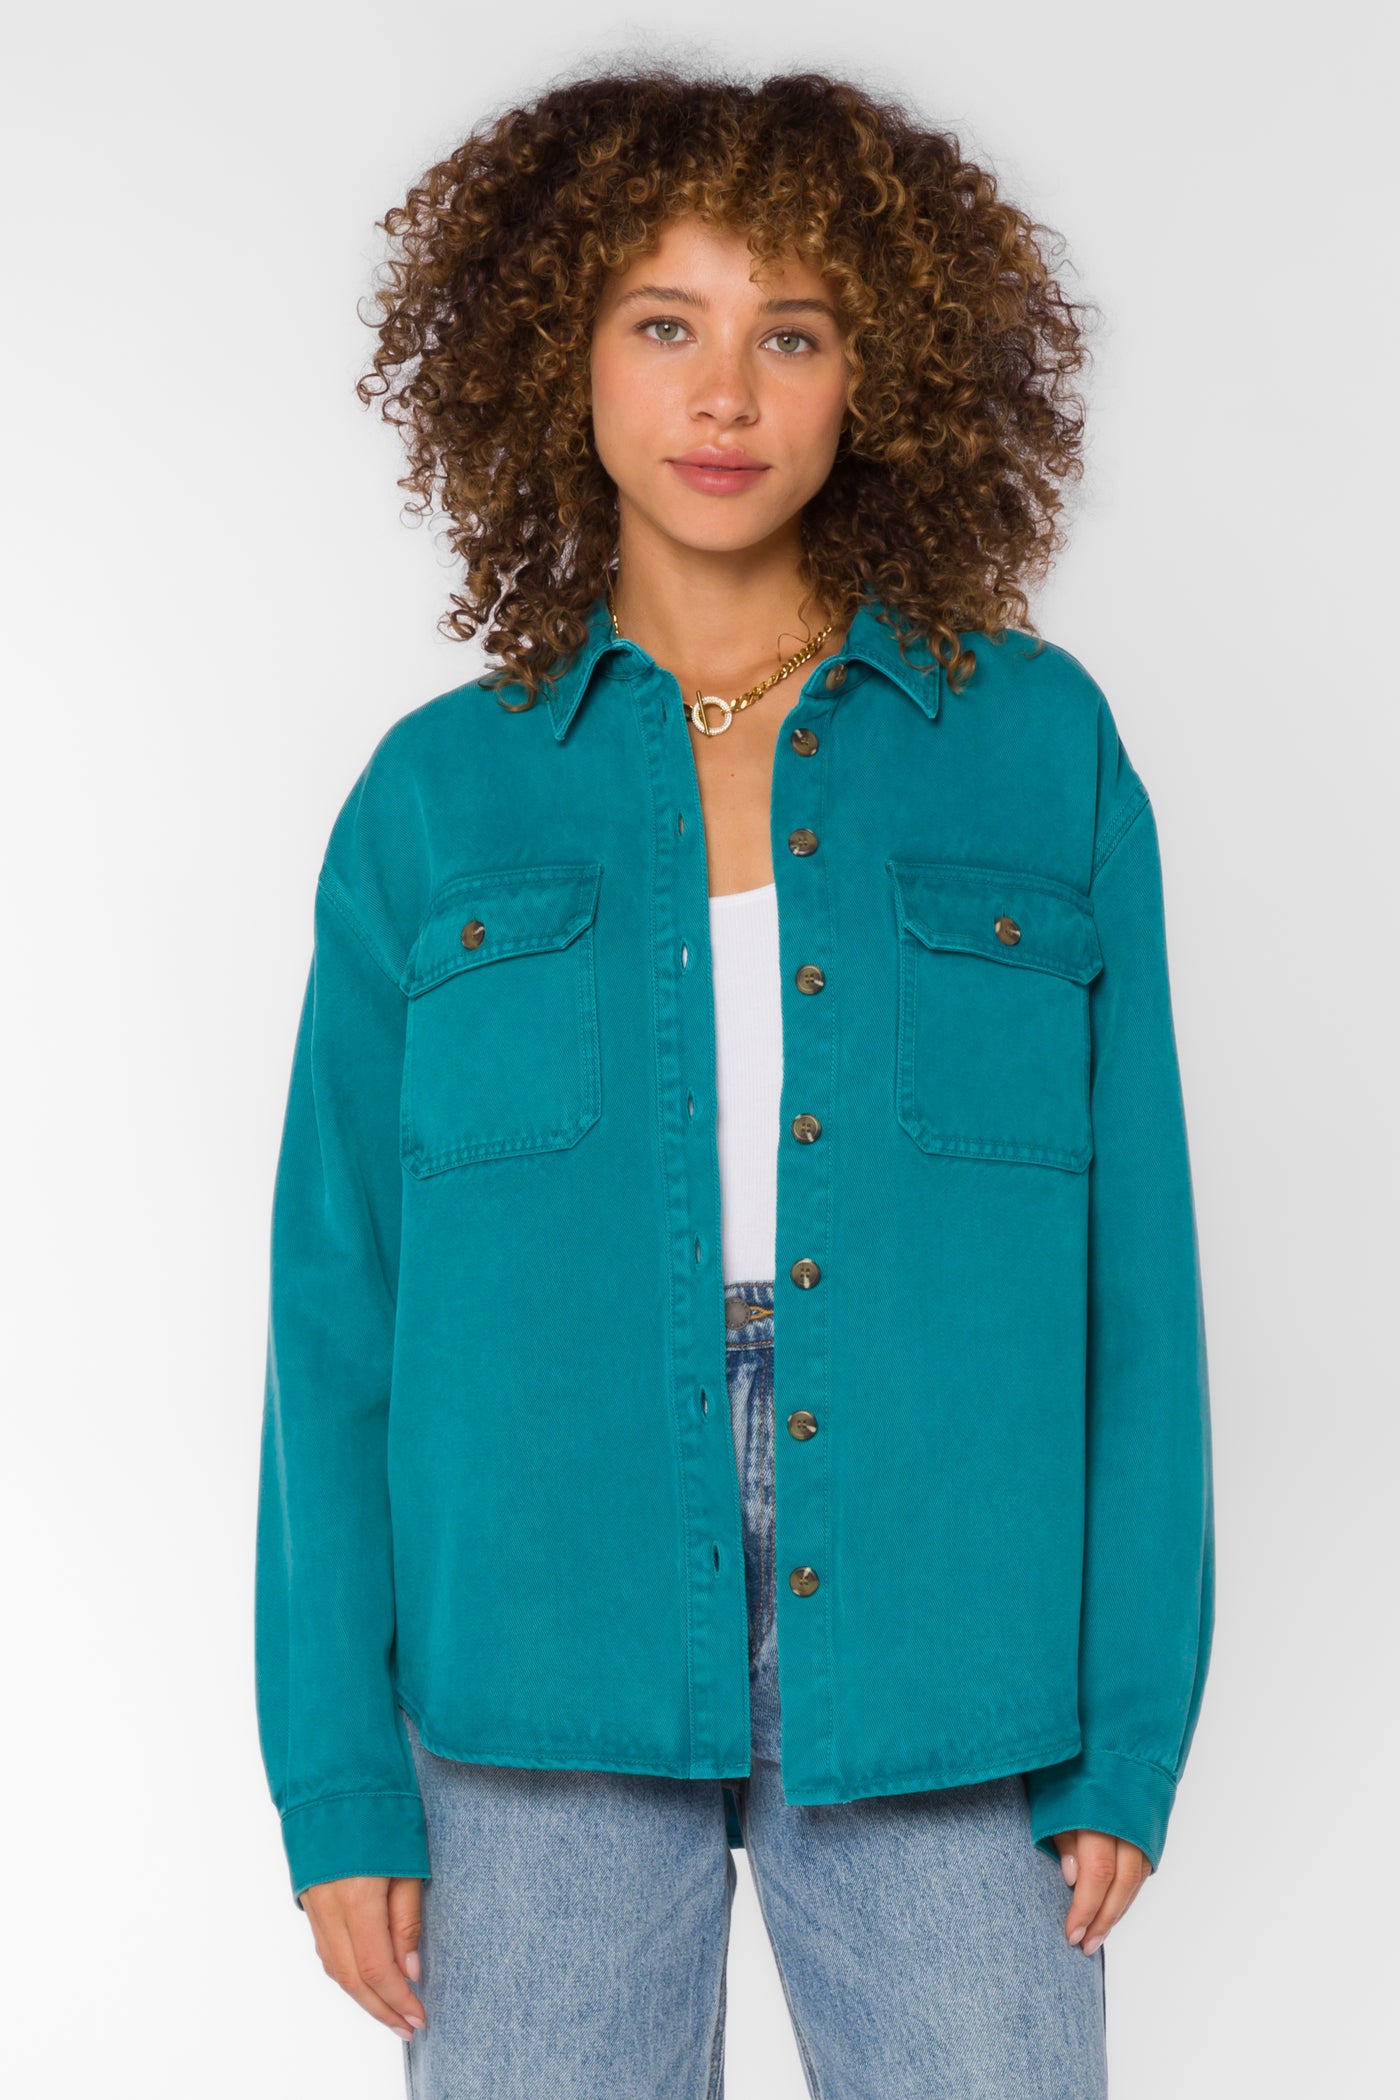 Carmele Peacock Shacket - Jackets & Outerwear - Velvet Heart Clothing